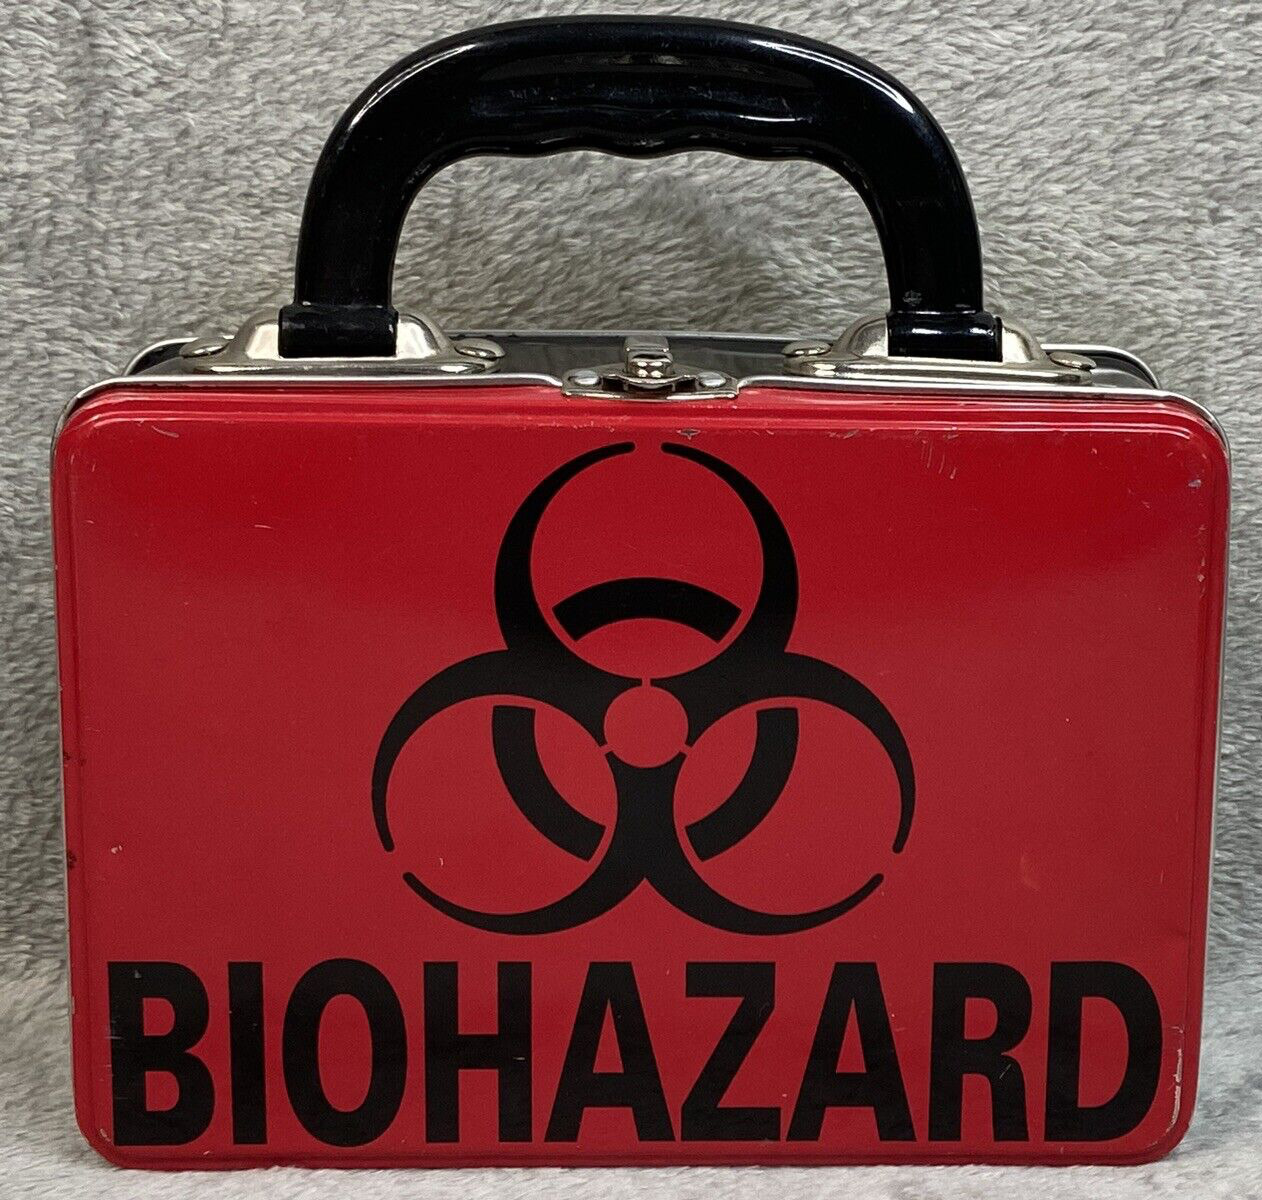 Lunchbox, Biohazard/Radioactive, Small Size, Metal, 1999